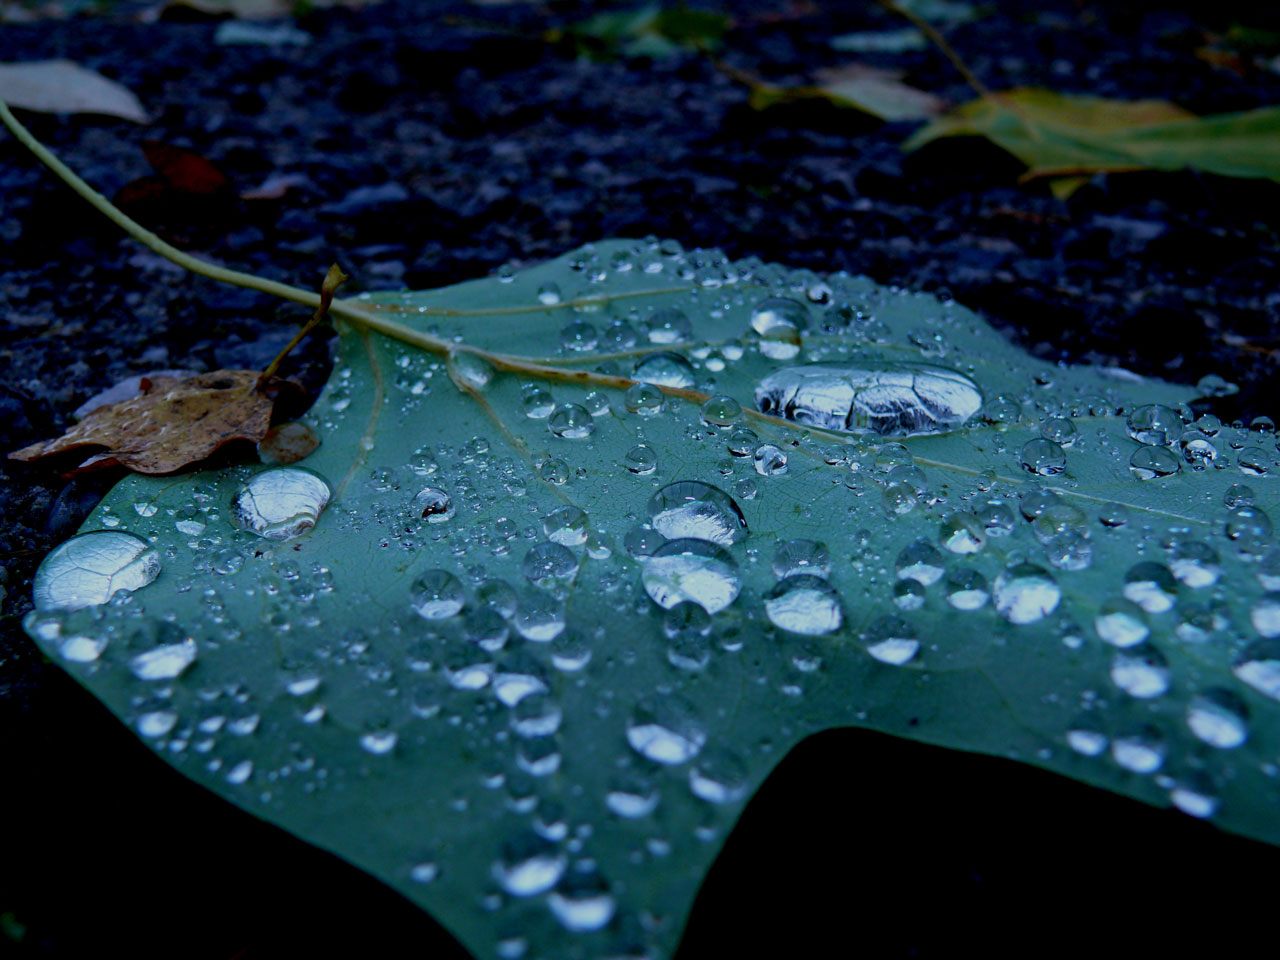 drop rain leaf free photo